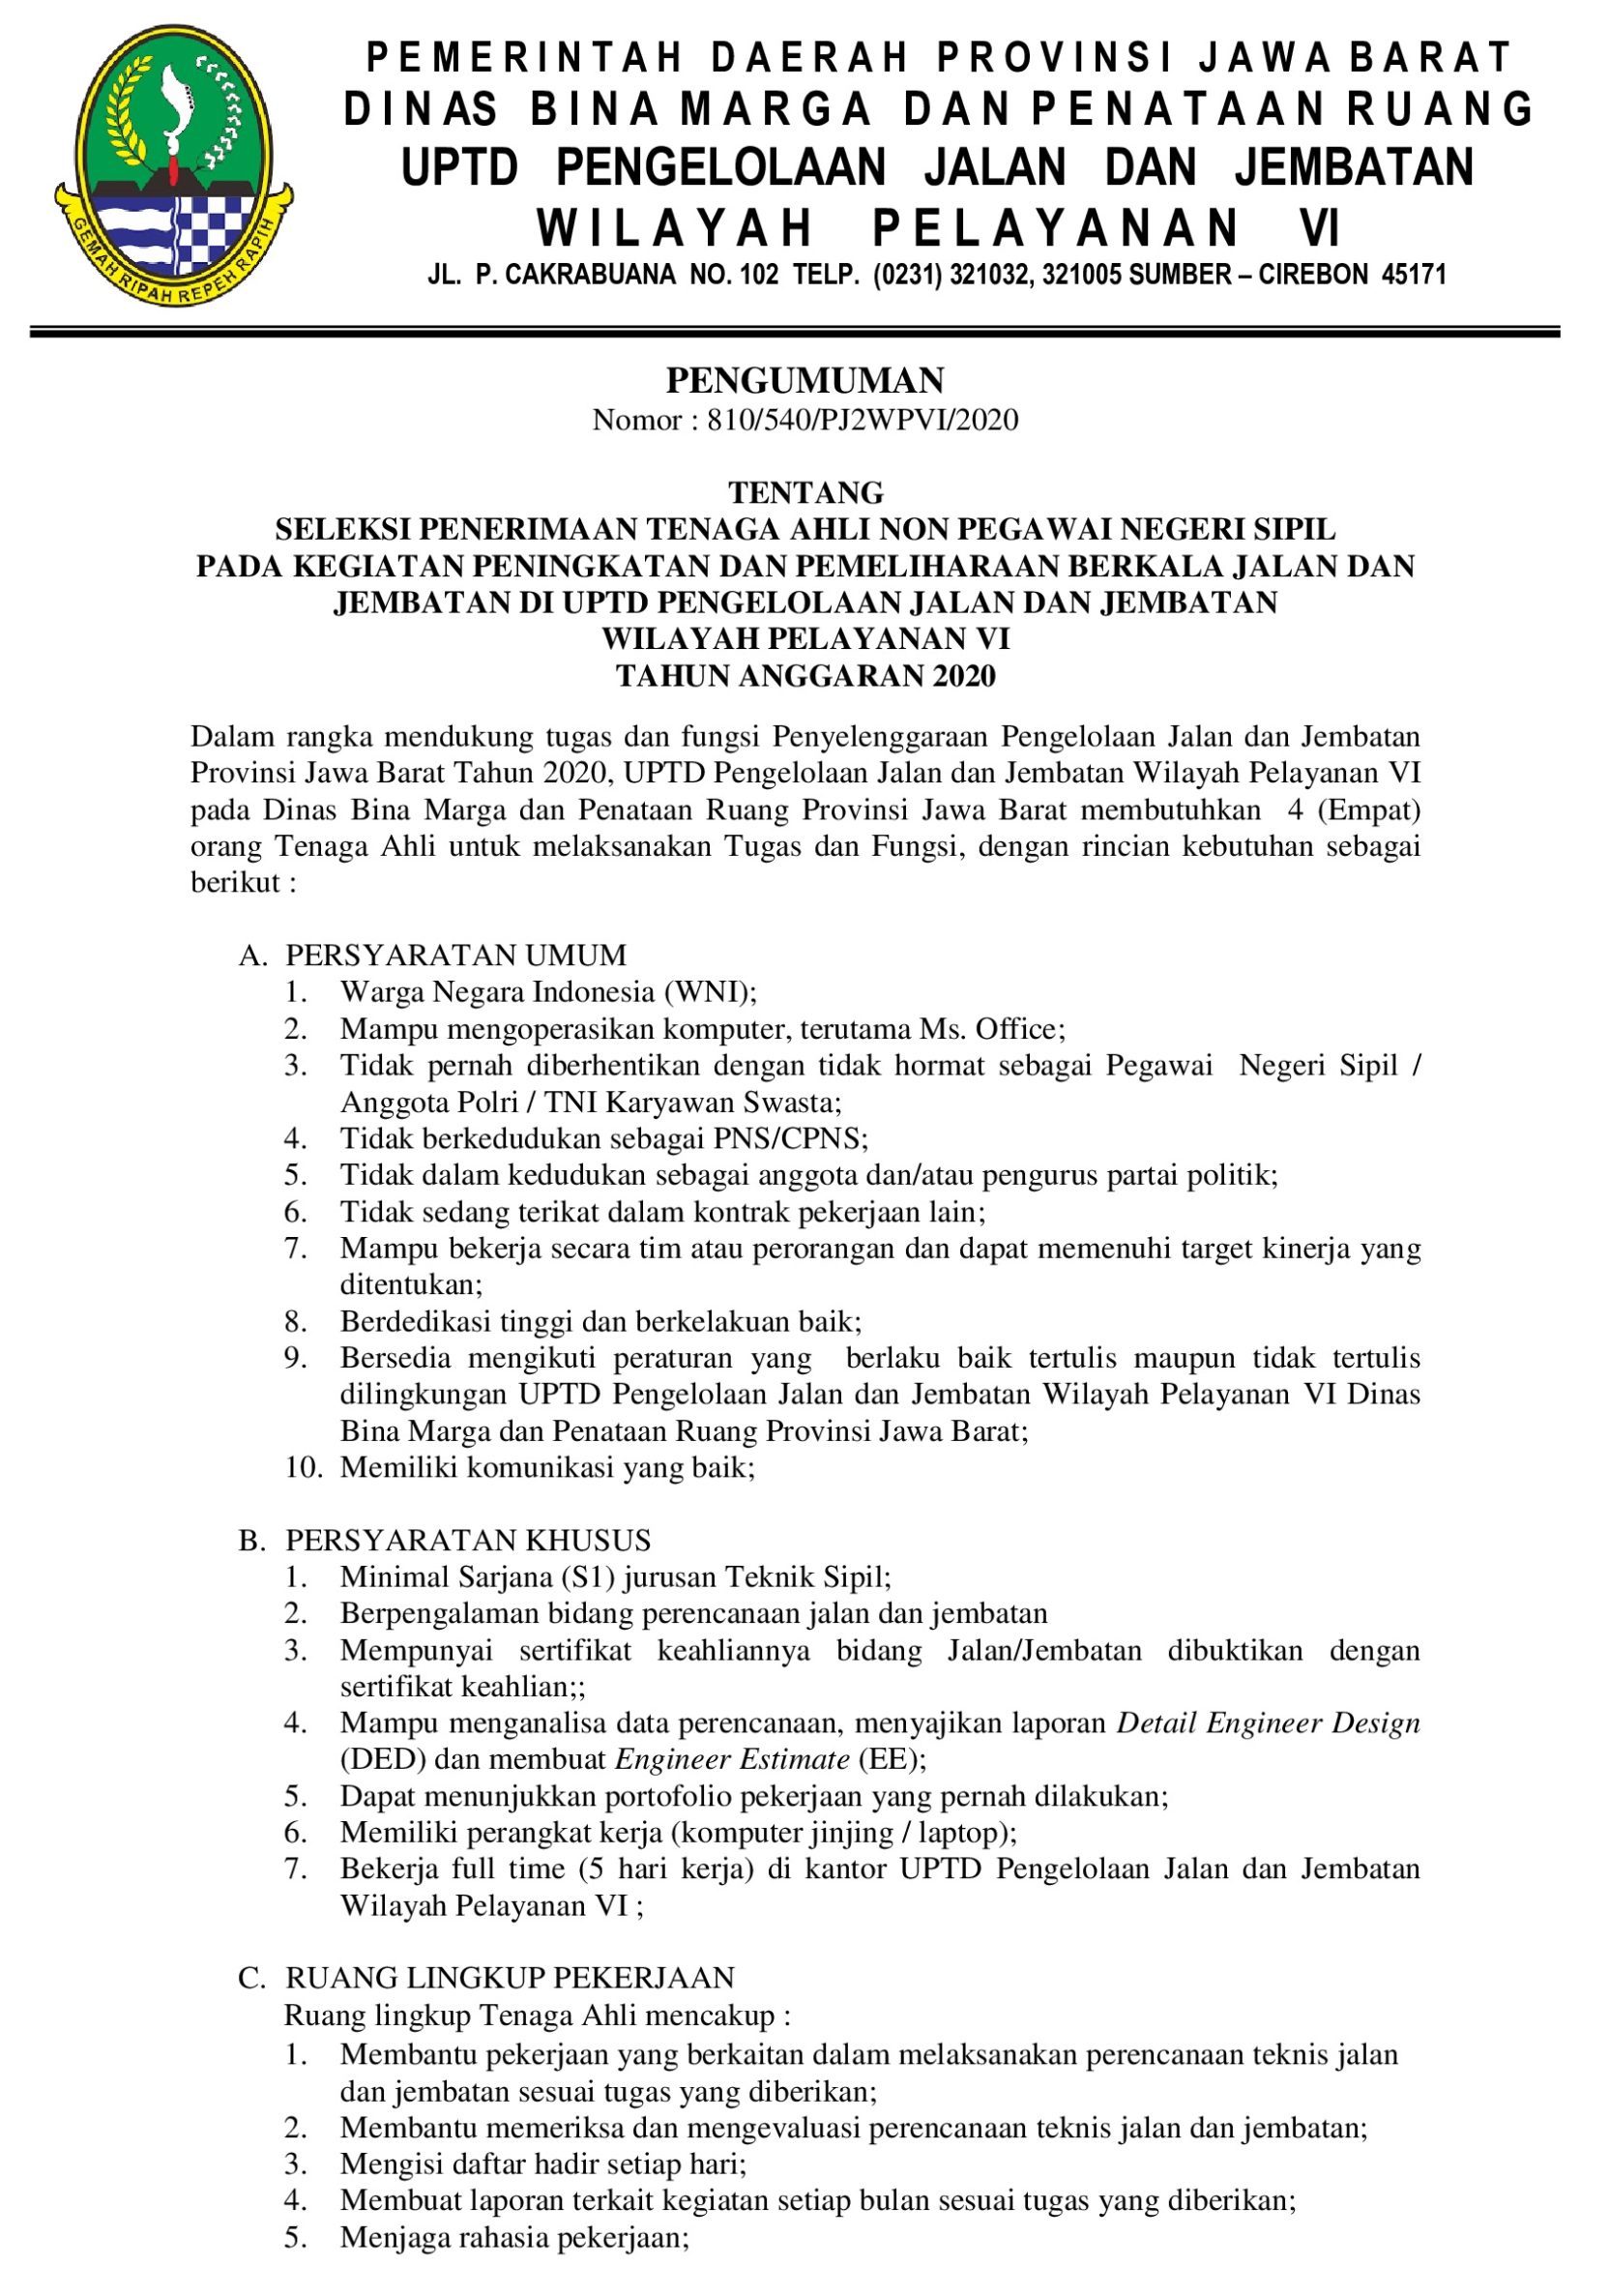 Rekrutmen Dinas Bina Marga Dan Penataan Ruang Provinsi Jawa Barat